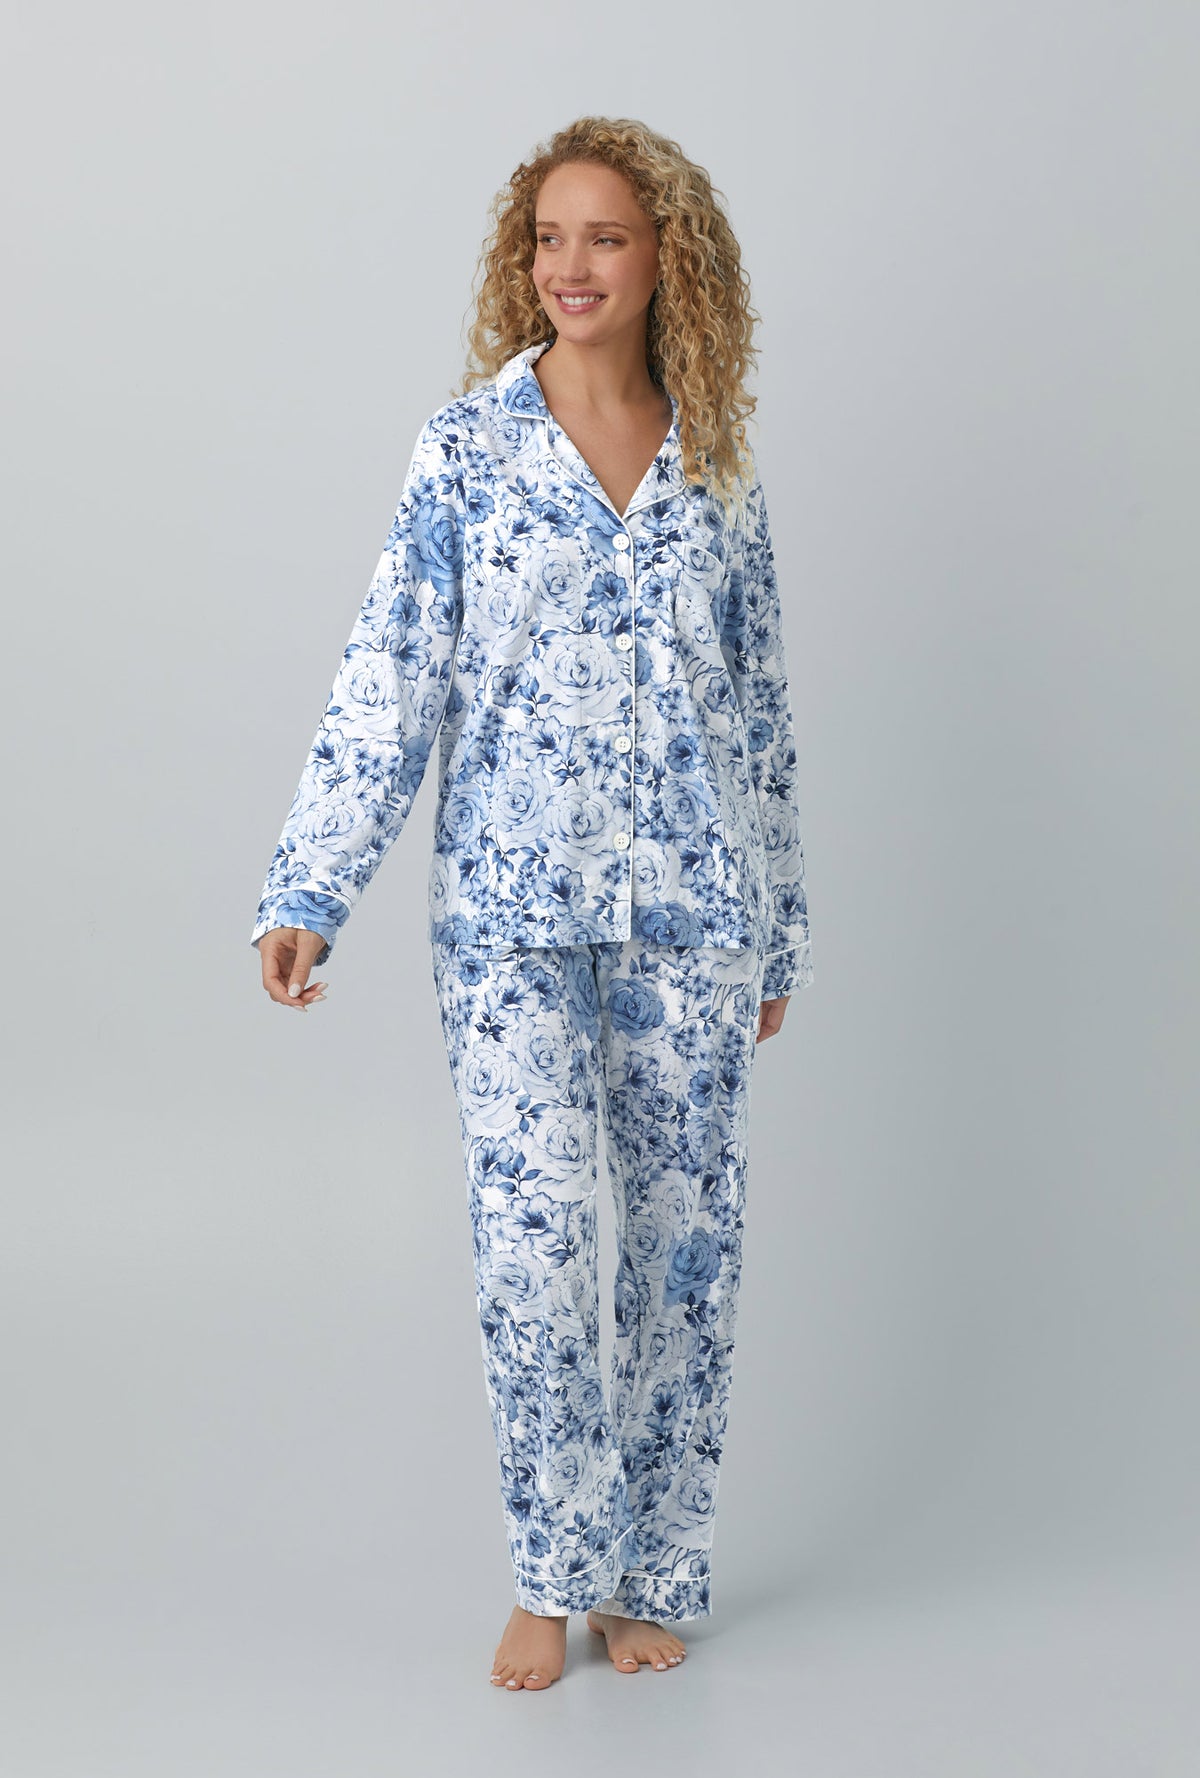 BedHead Pajamas Long Sleeve Buffalo Plaid Classic Woven Cotton